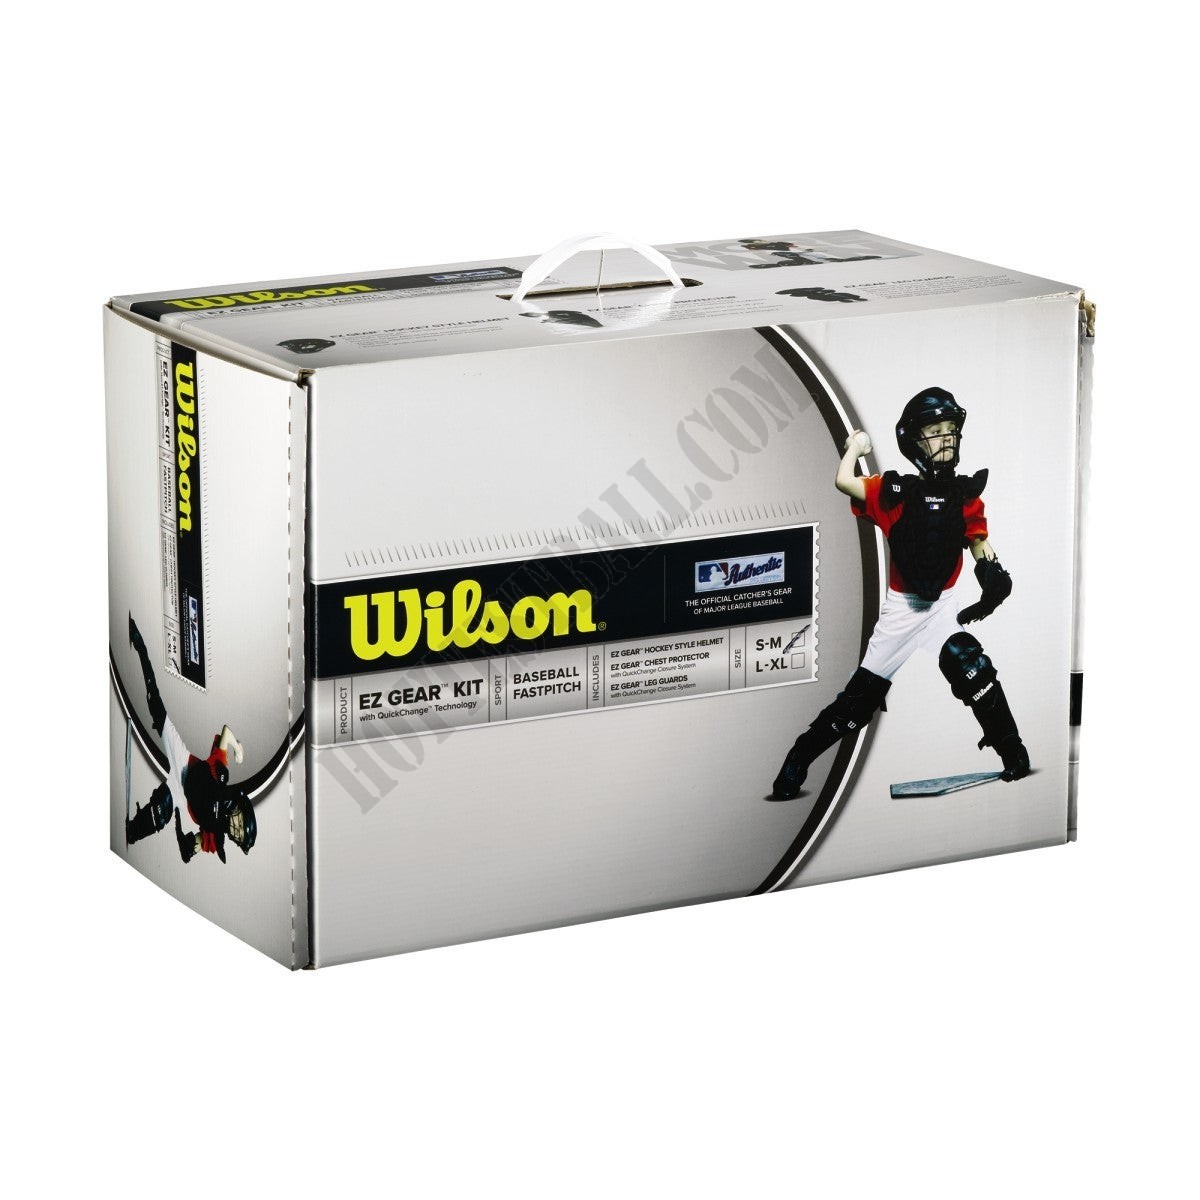 EZ Gear Catcher's Kit - Oakland Athletics - Wilson Discount Store - -5